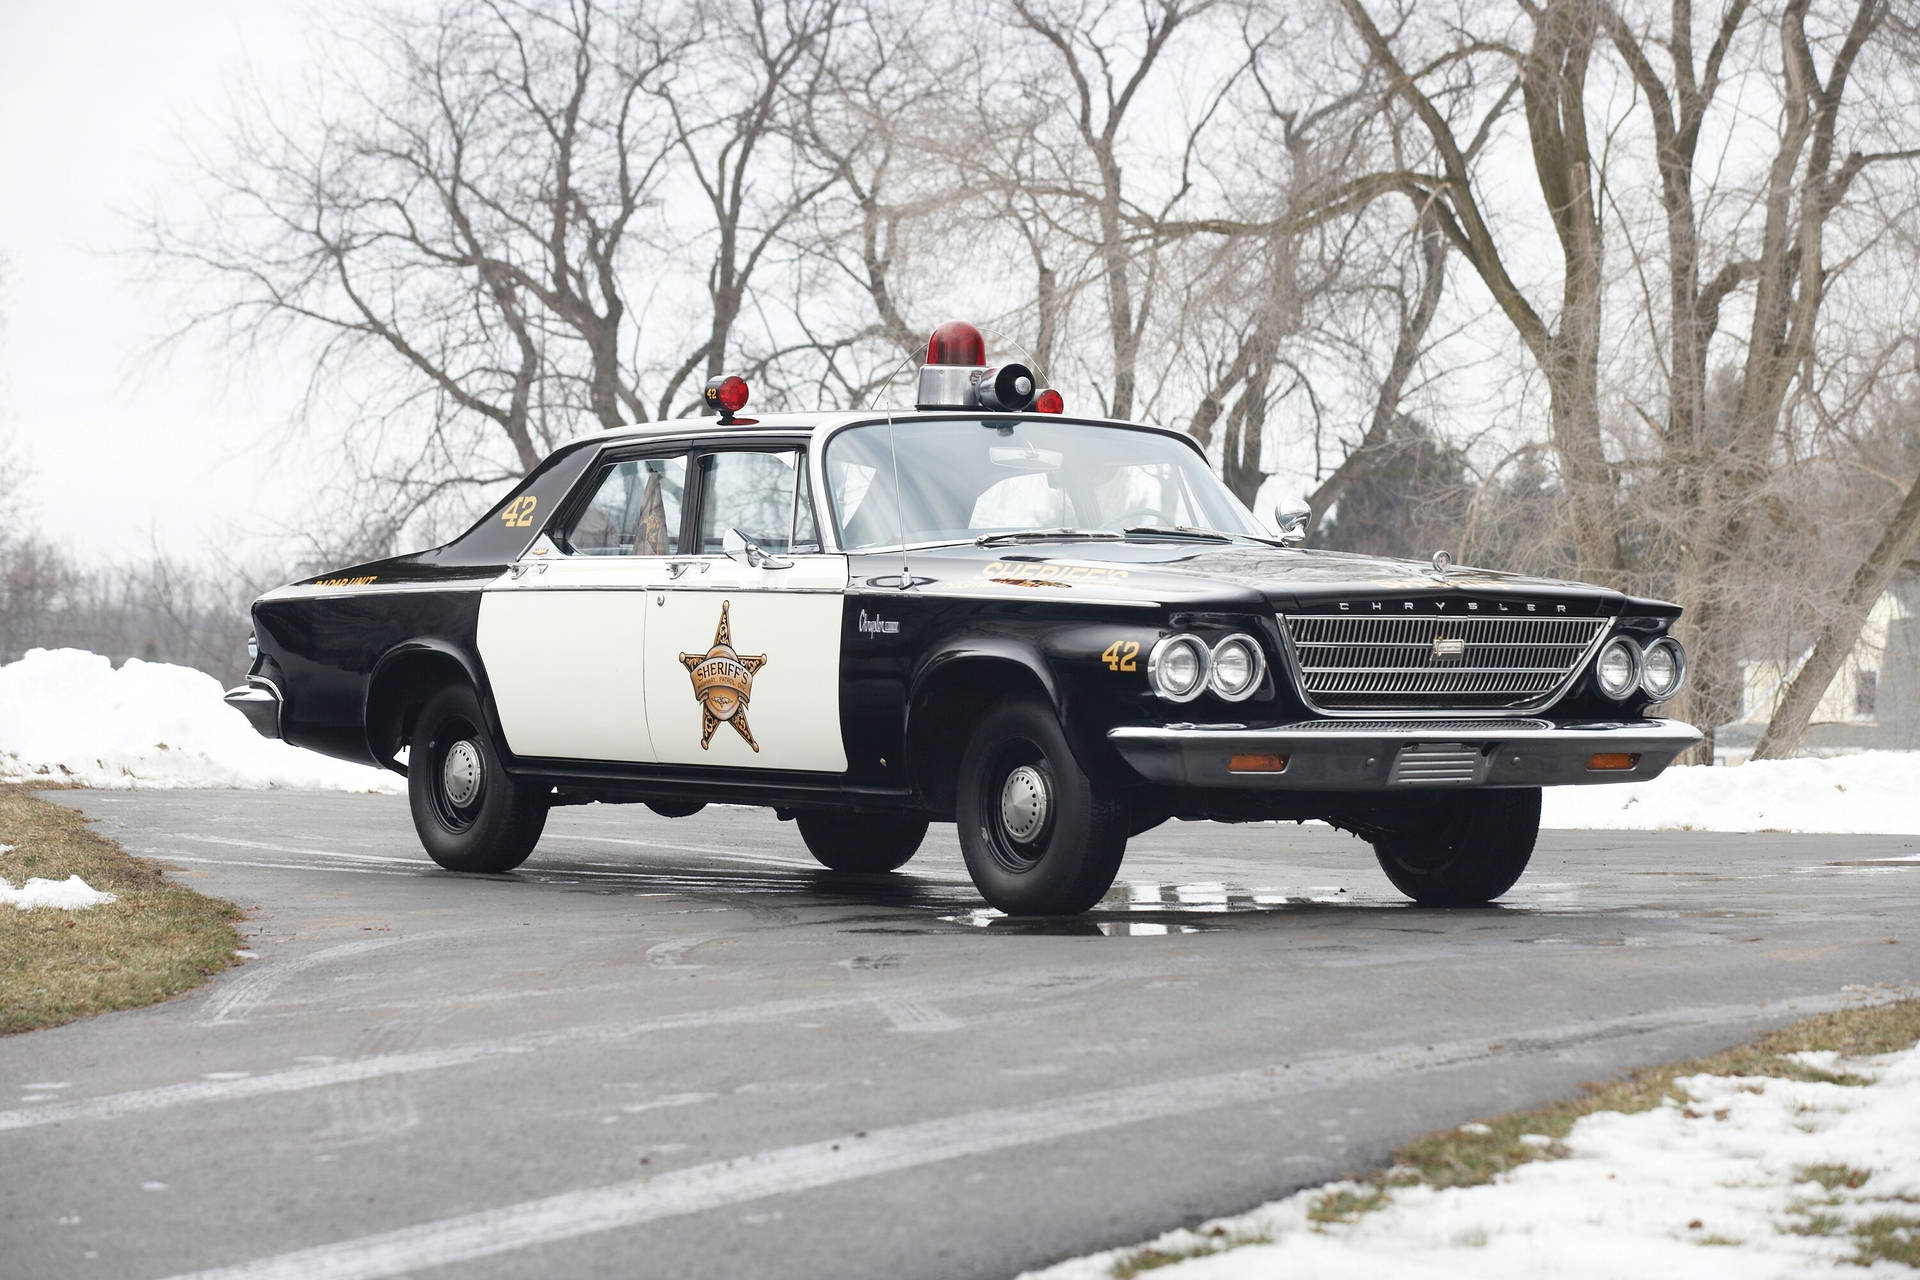 Official Chrysler Sheriff Patrol Car Background